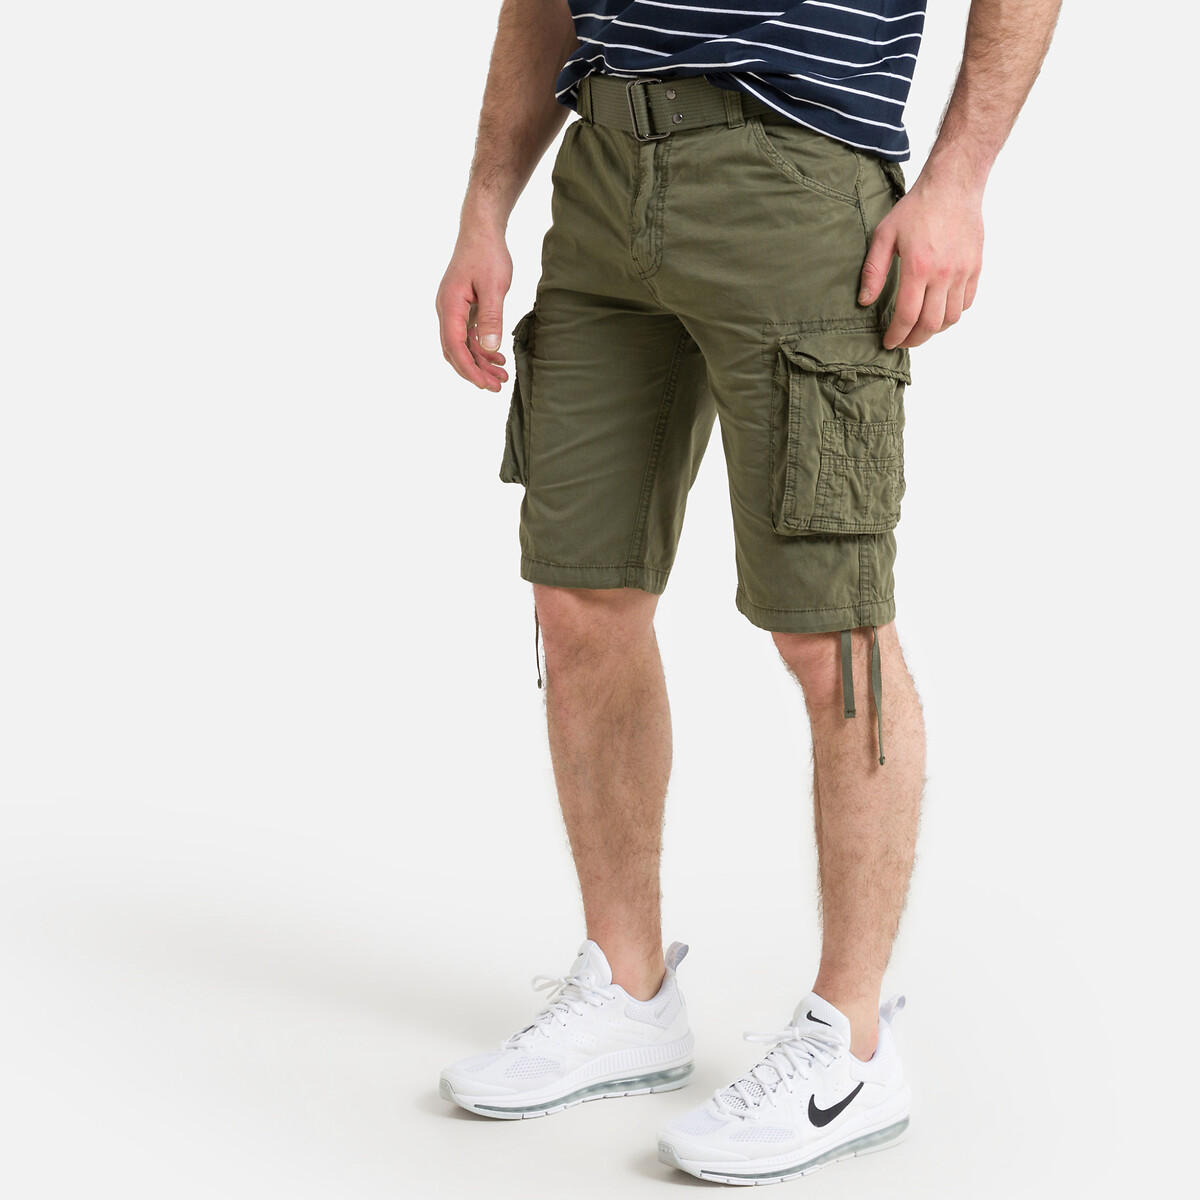 Tr ranger 30 cotton bermuda shorts with belt khaki green Schott | La ...